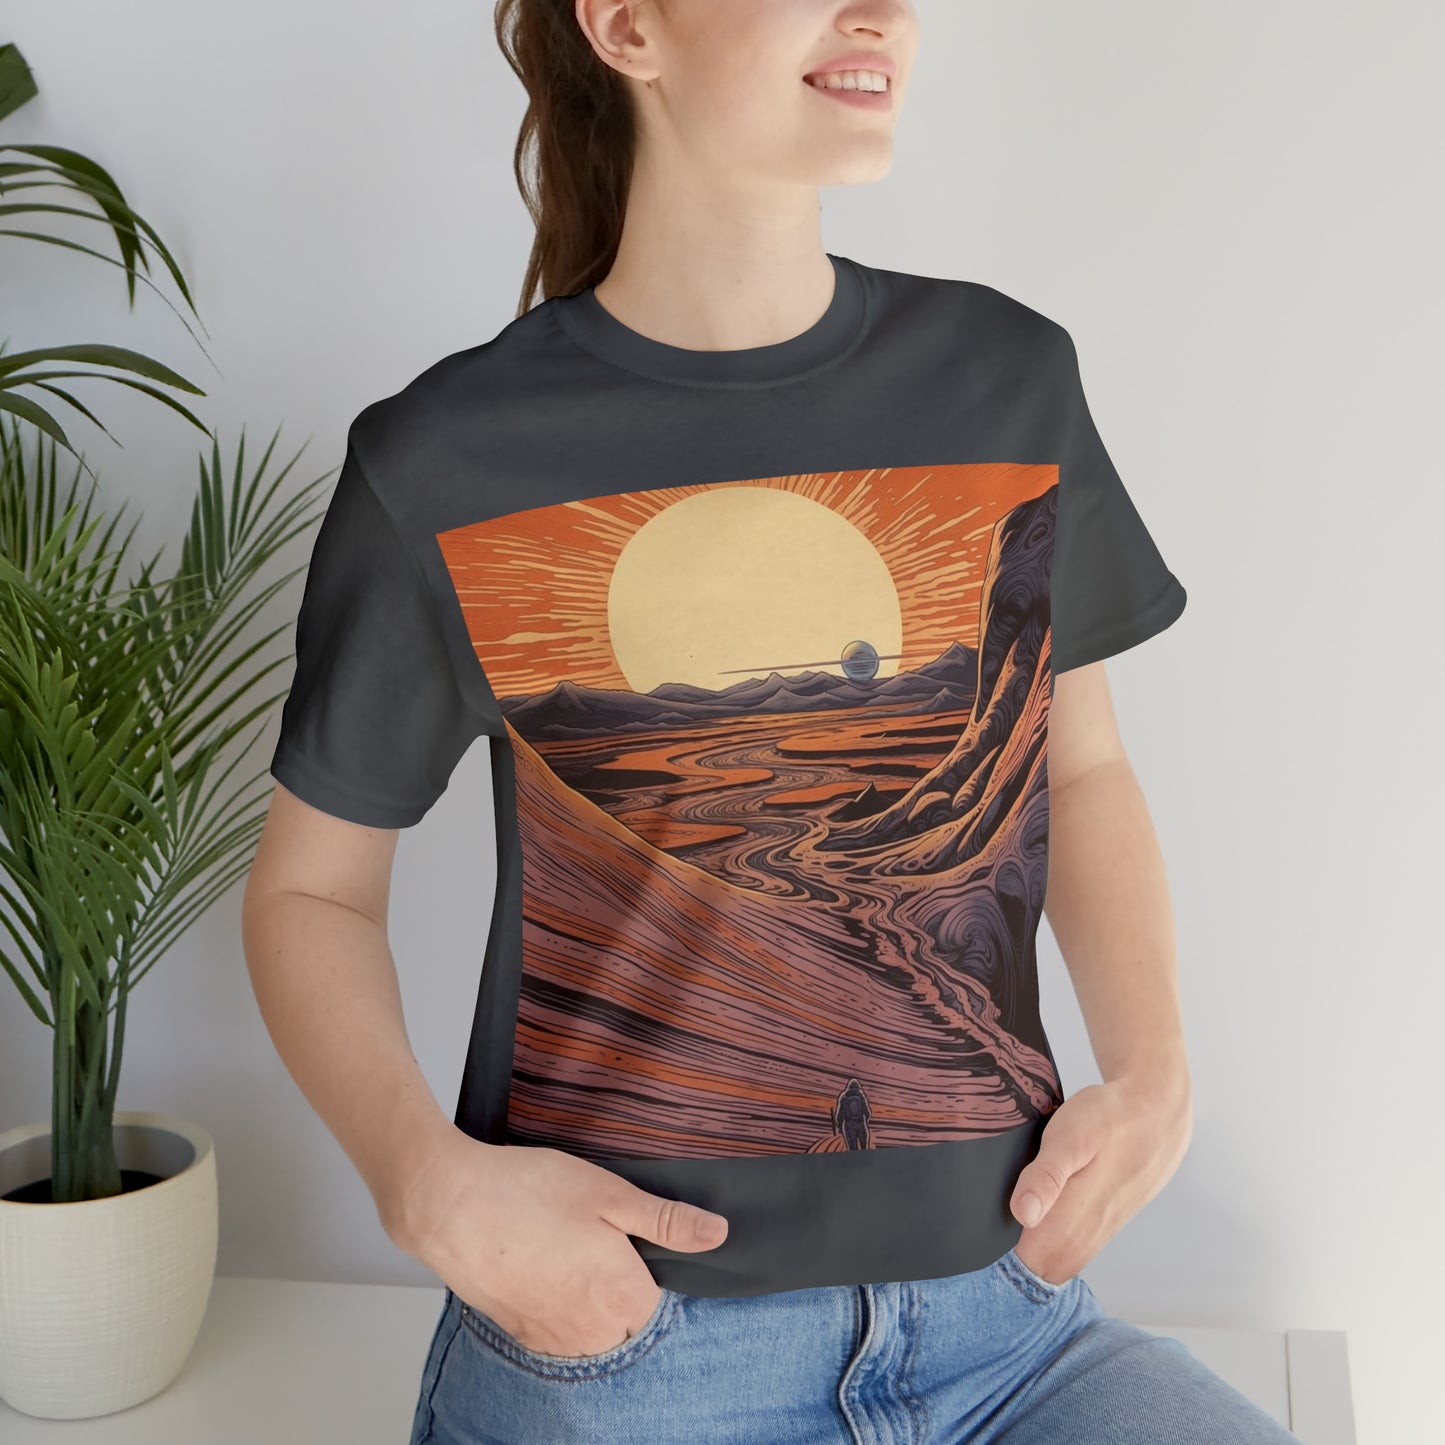 asphalt-quest-thread-tee-shirt-with-large-sunrise-over-dunes-on-center-of-shirt